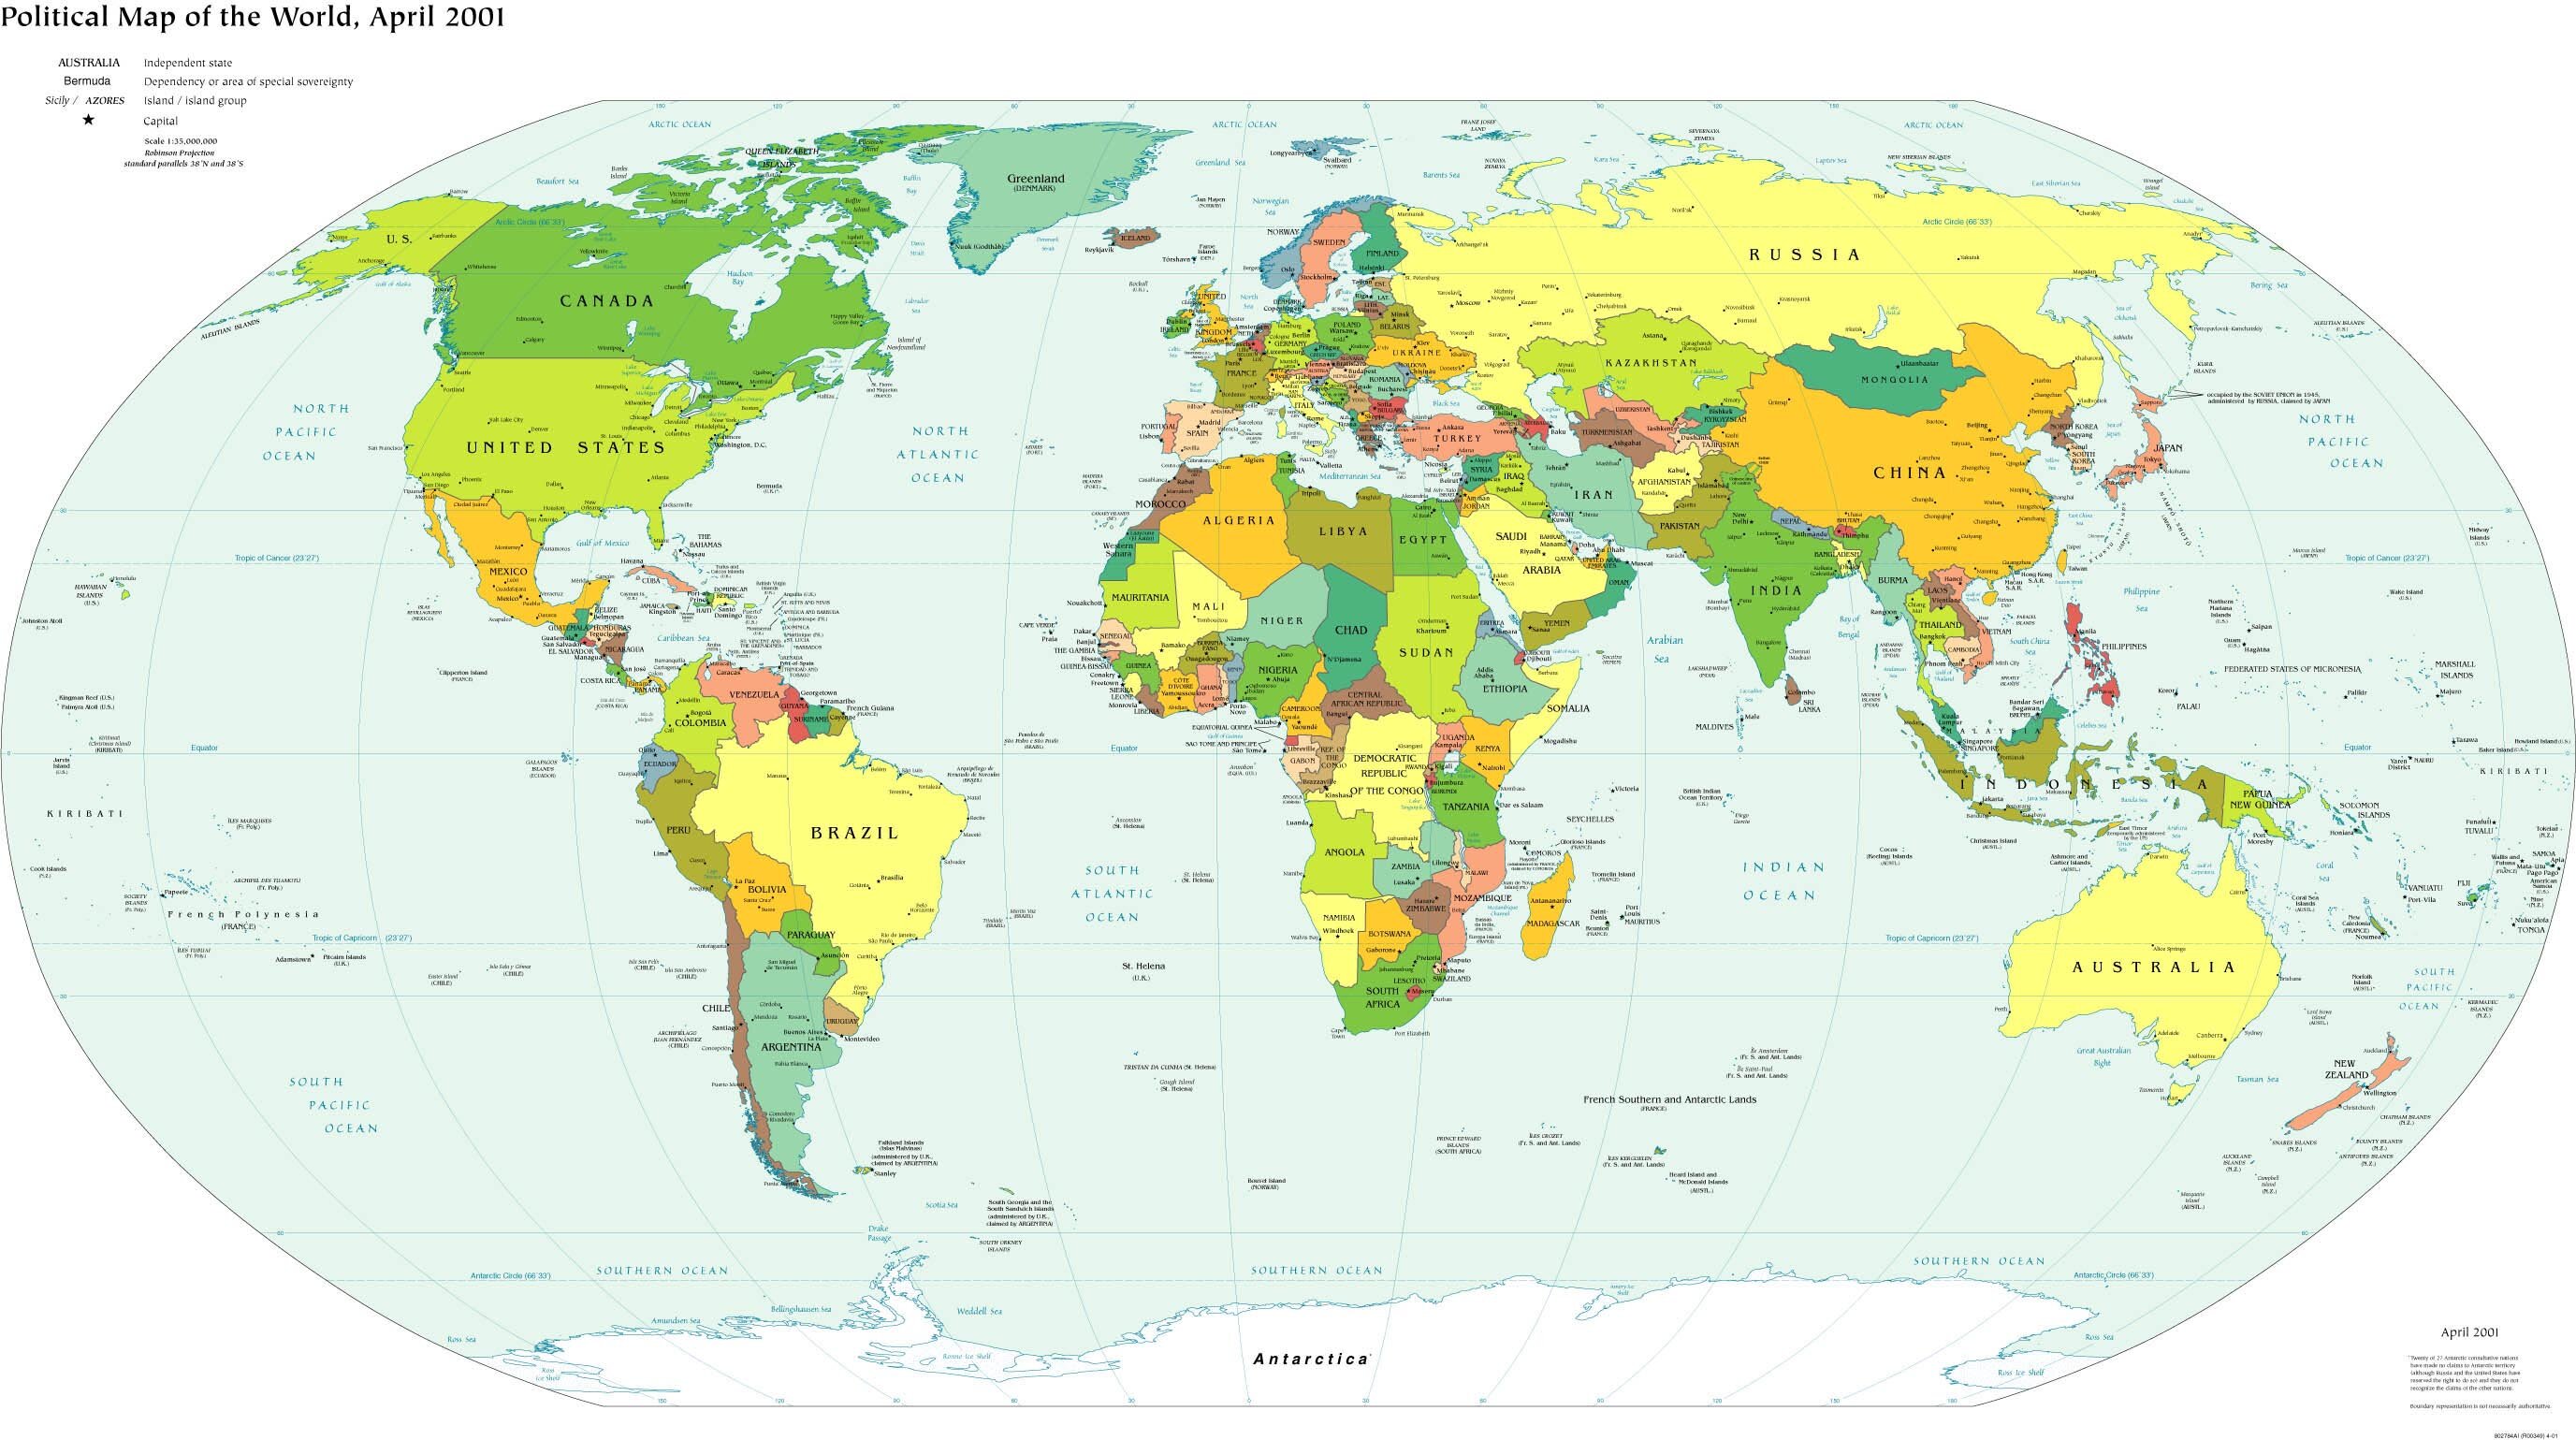 World Map Biomes